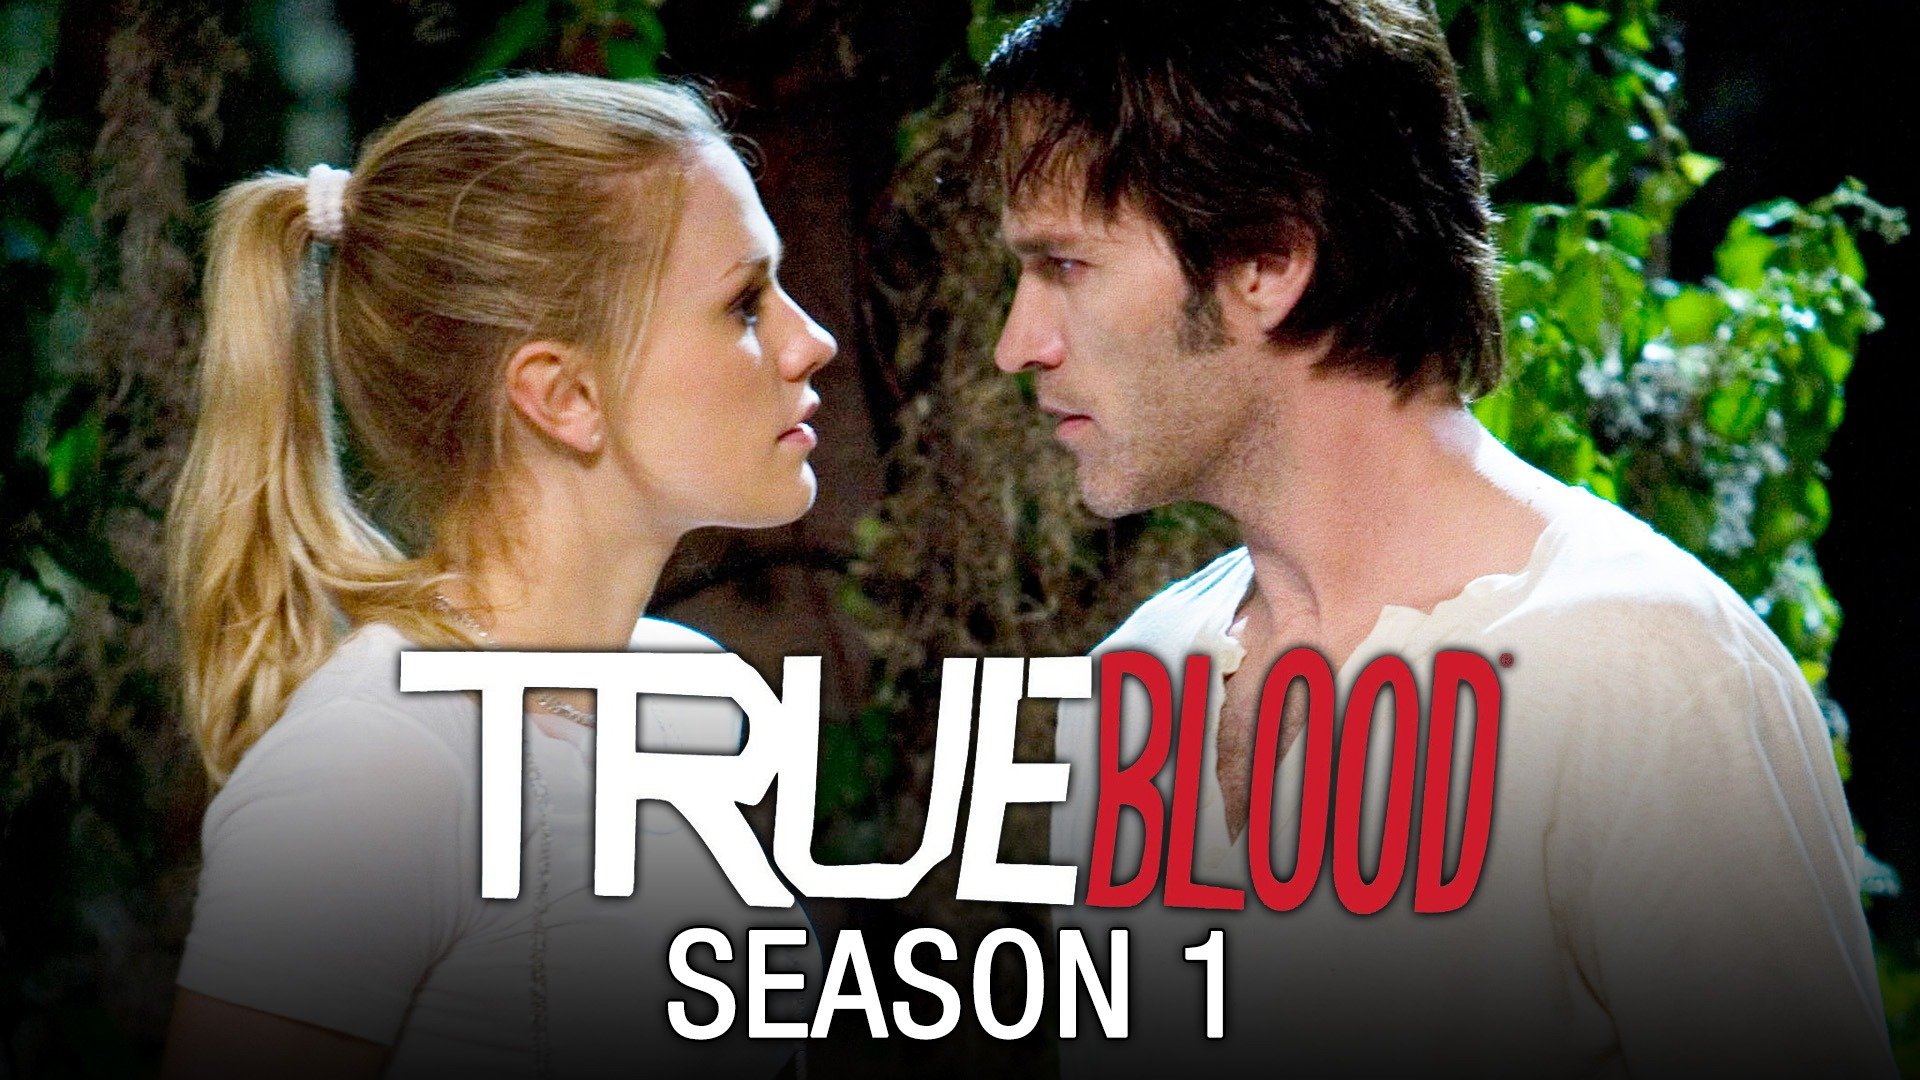 true blood season 3 review